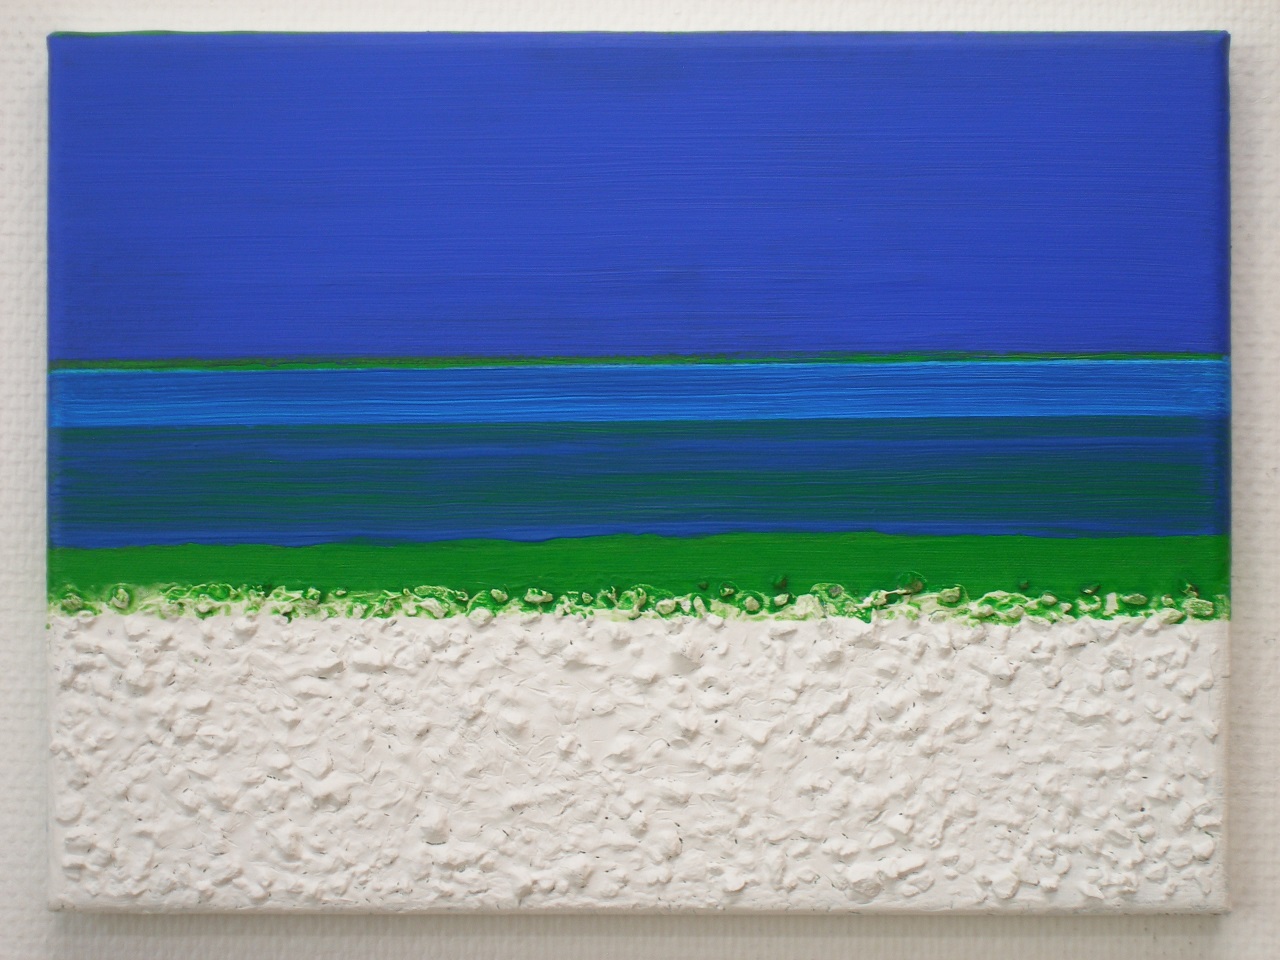 Blue moods I, acrylics - mixed media on canvas, 30x40cm